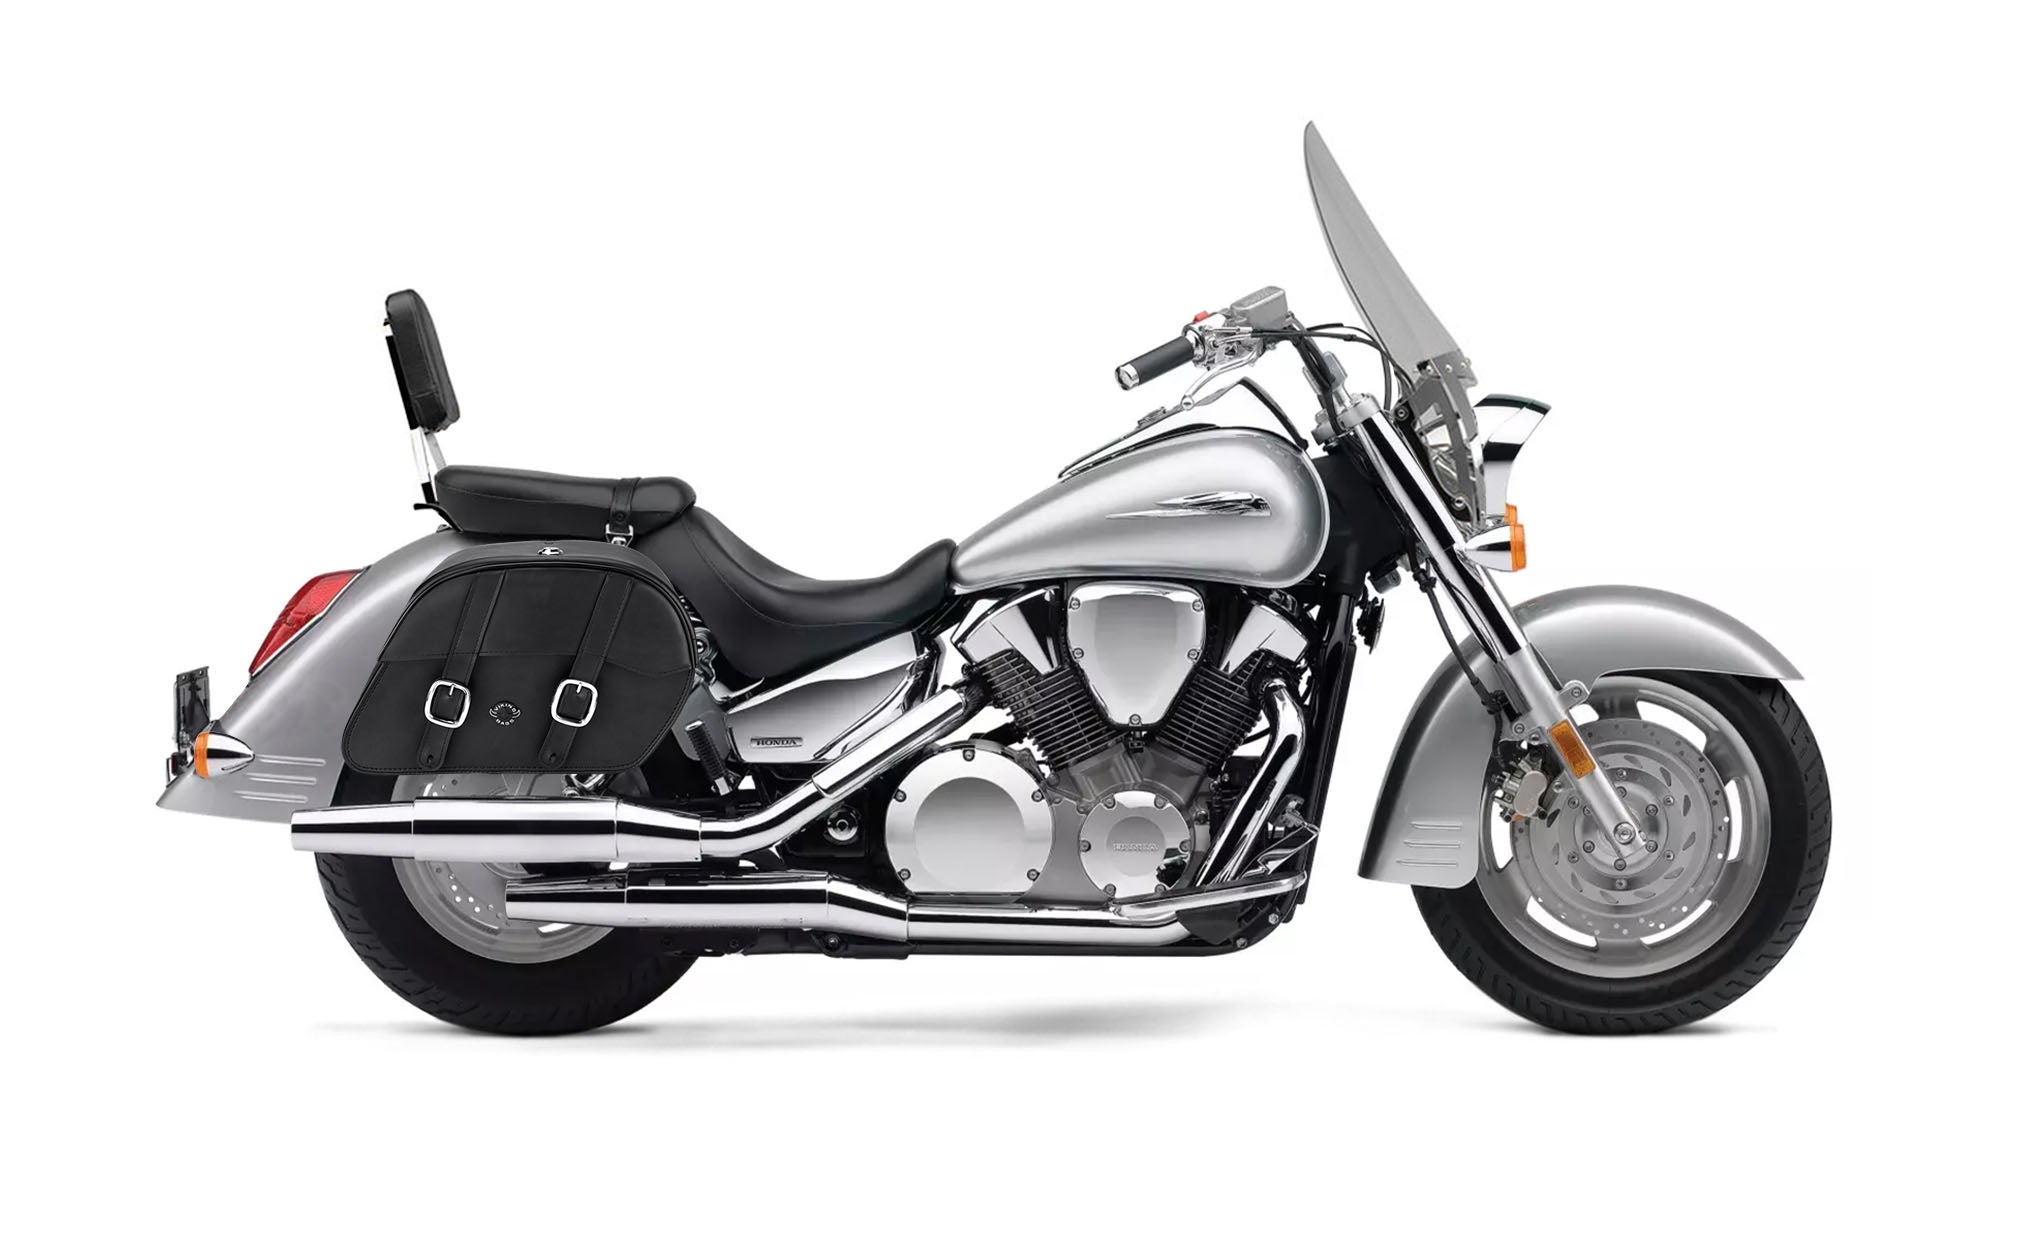 Viking Skarner Large Honda Vtx 1300 T Tourer Shock Cut Out Leather Motorcycle Saddlebags on Bike Photo @expand